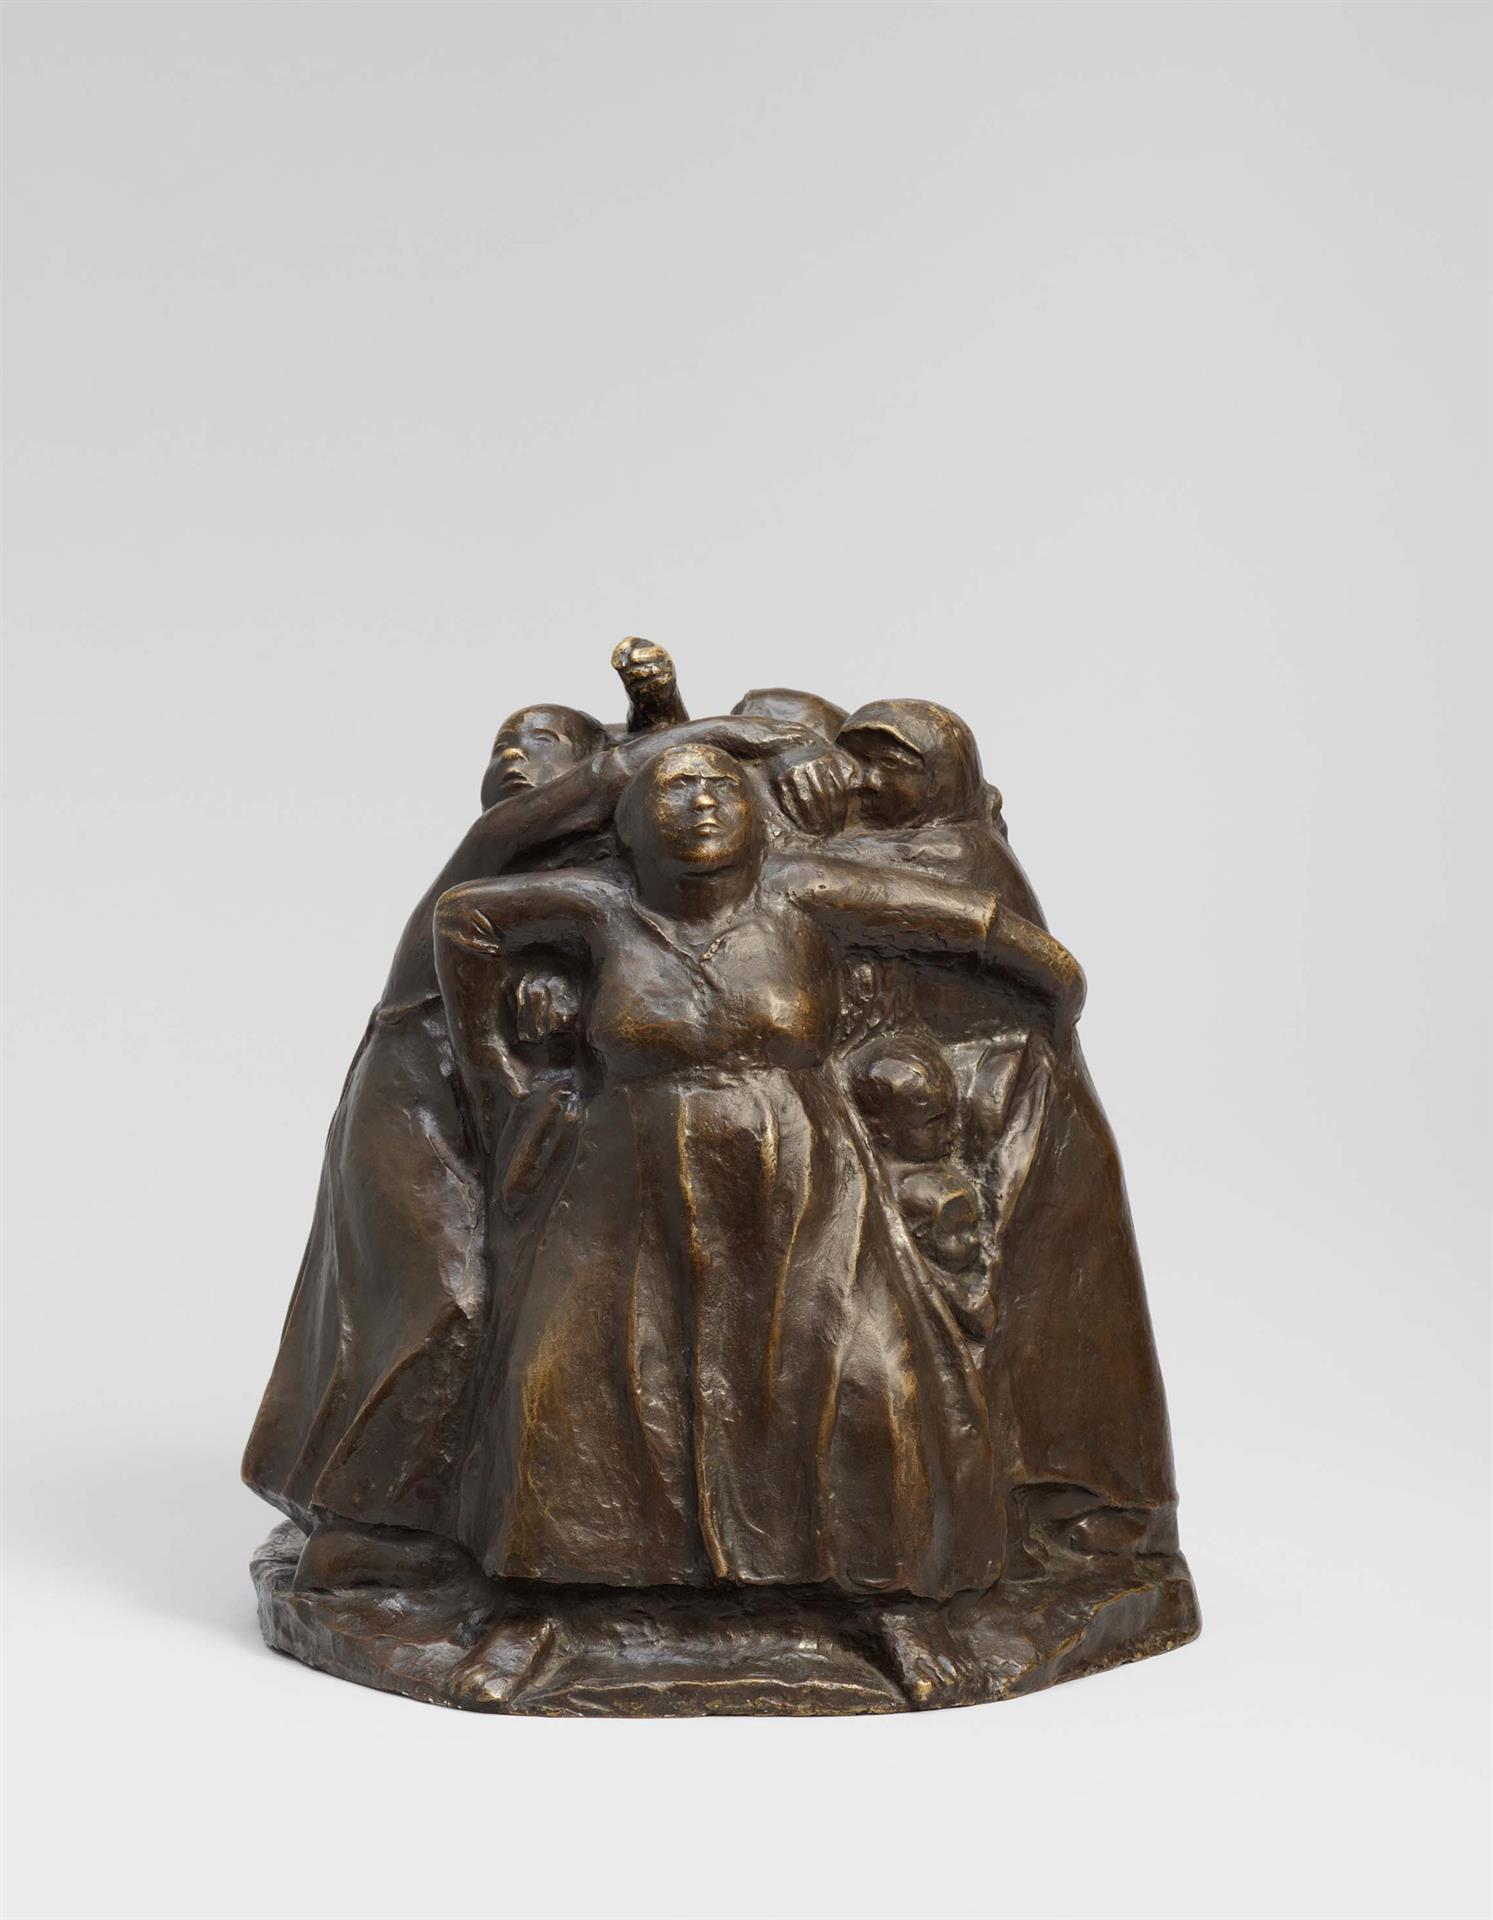 Käthe Kollwitz, La Tour des mères, 1937/38, bronze, Seeler 35 II.B.1., Collection Kollwitz de Cologne © Käthe Kollwitz Museum Köln